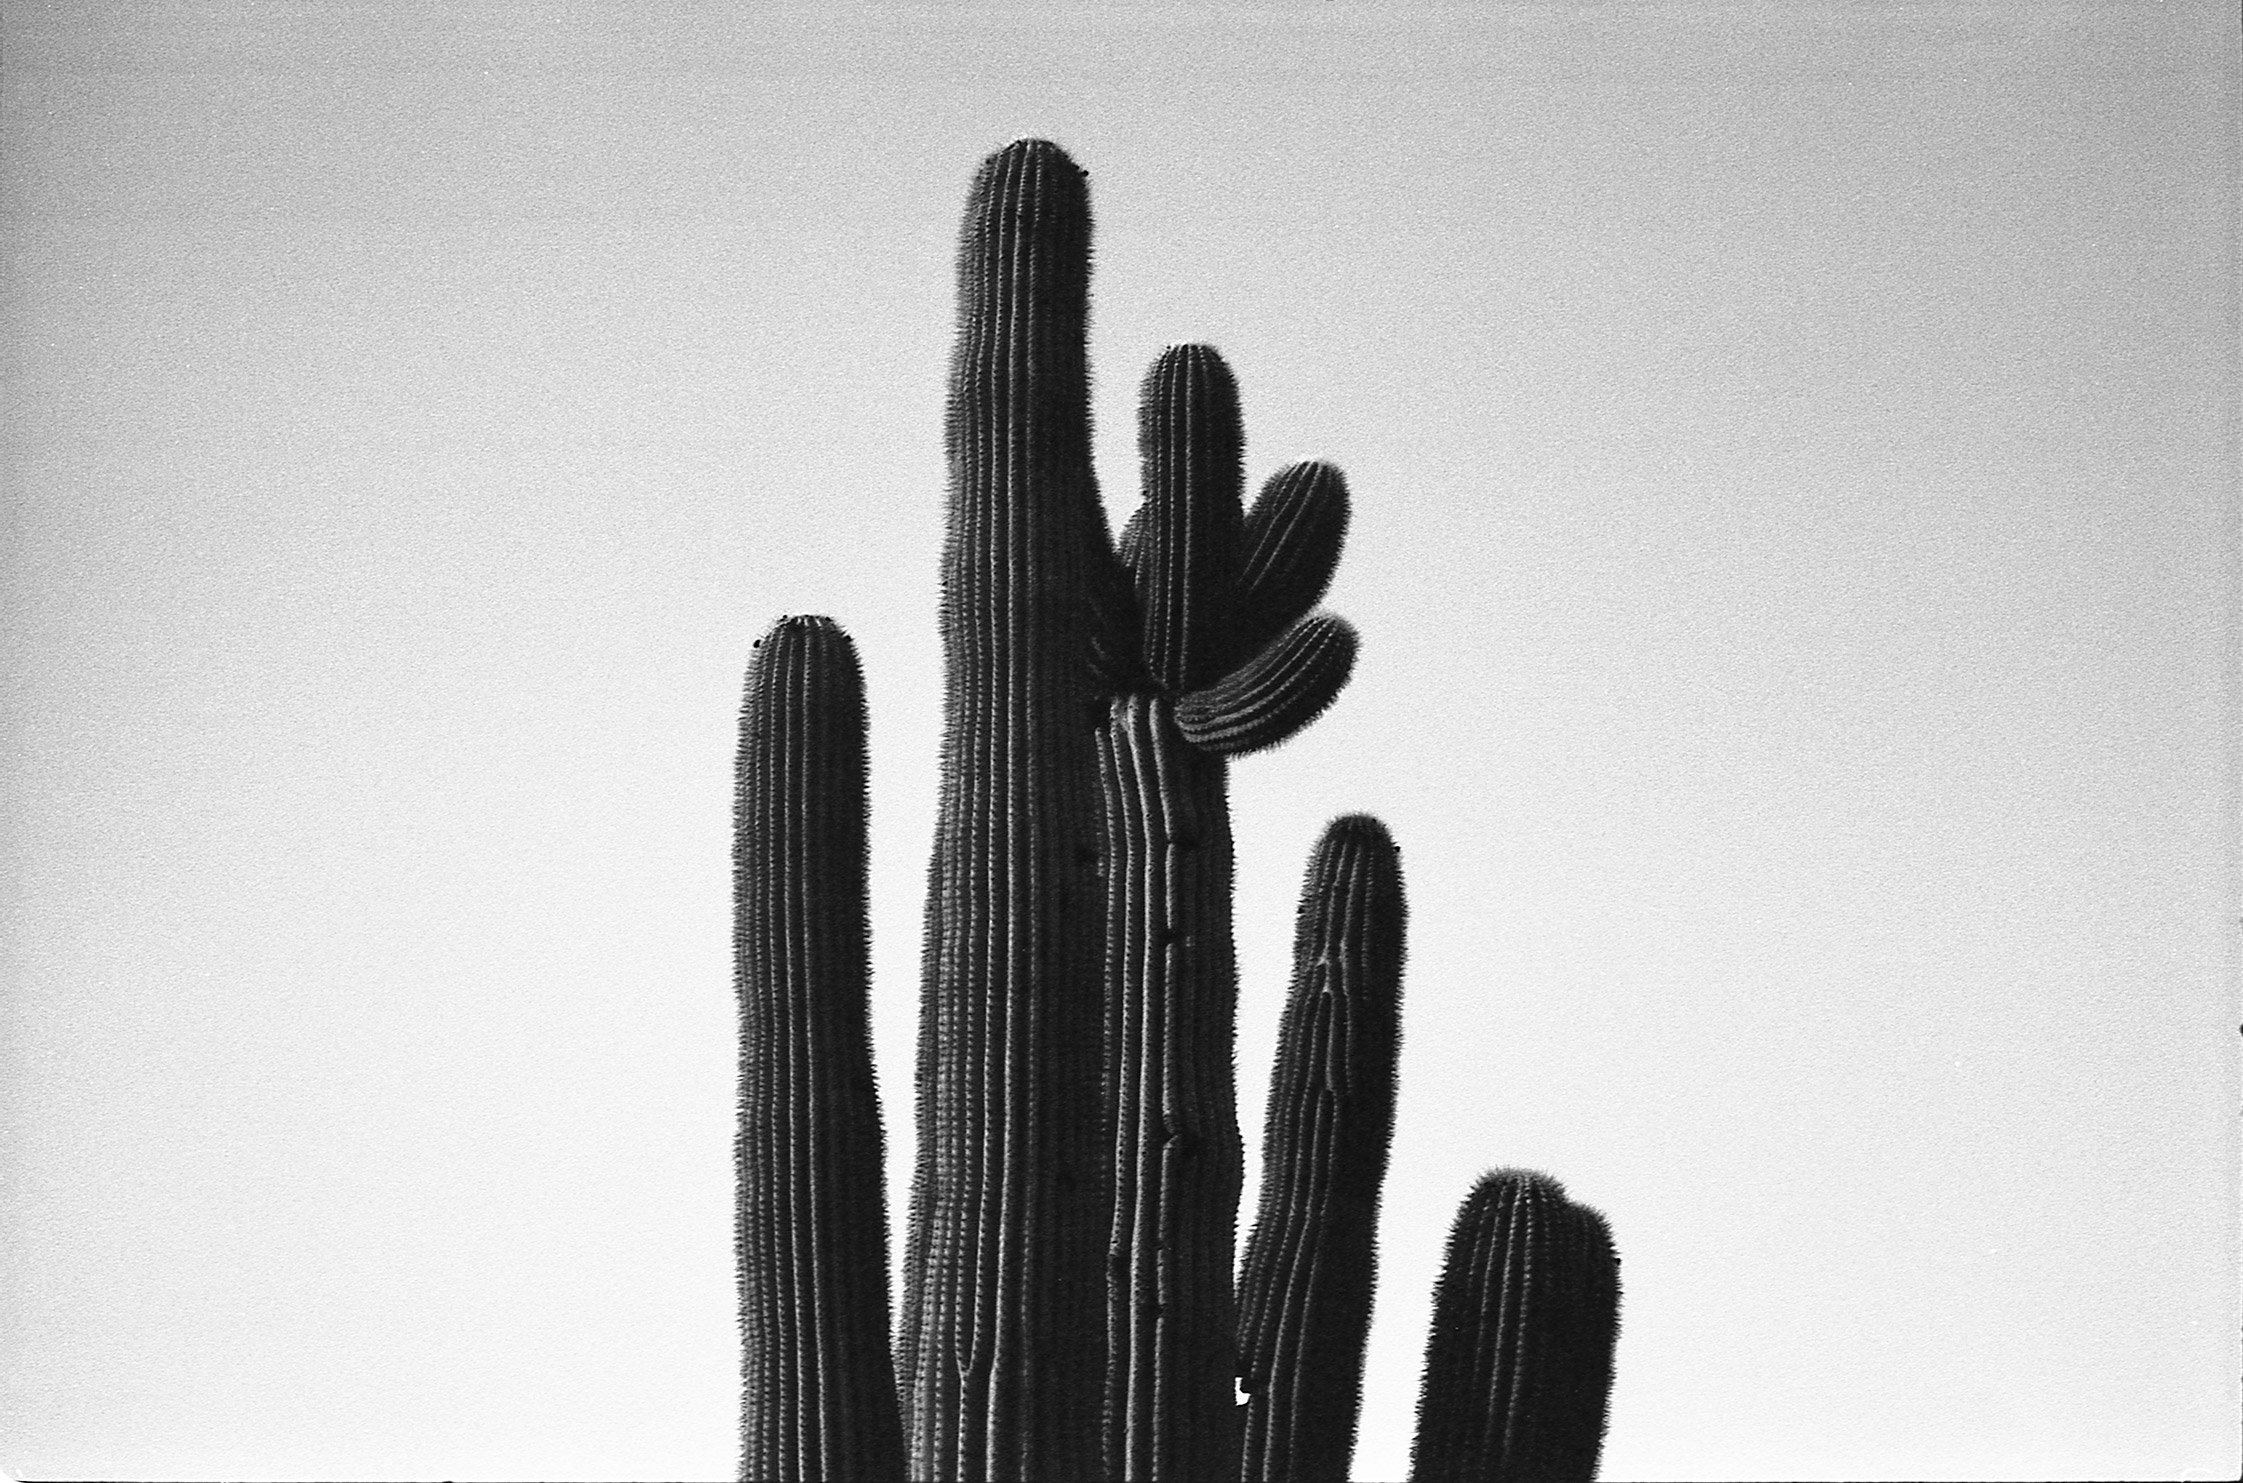 Top of Cactus, Casa Grande AZ, September 2022